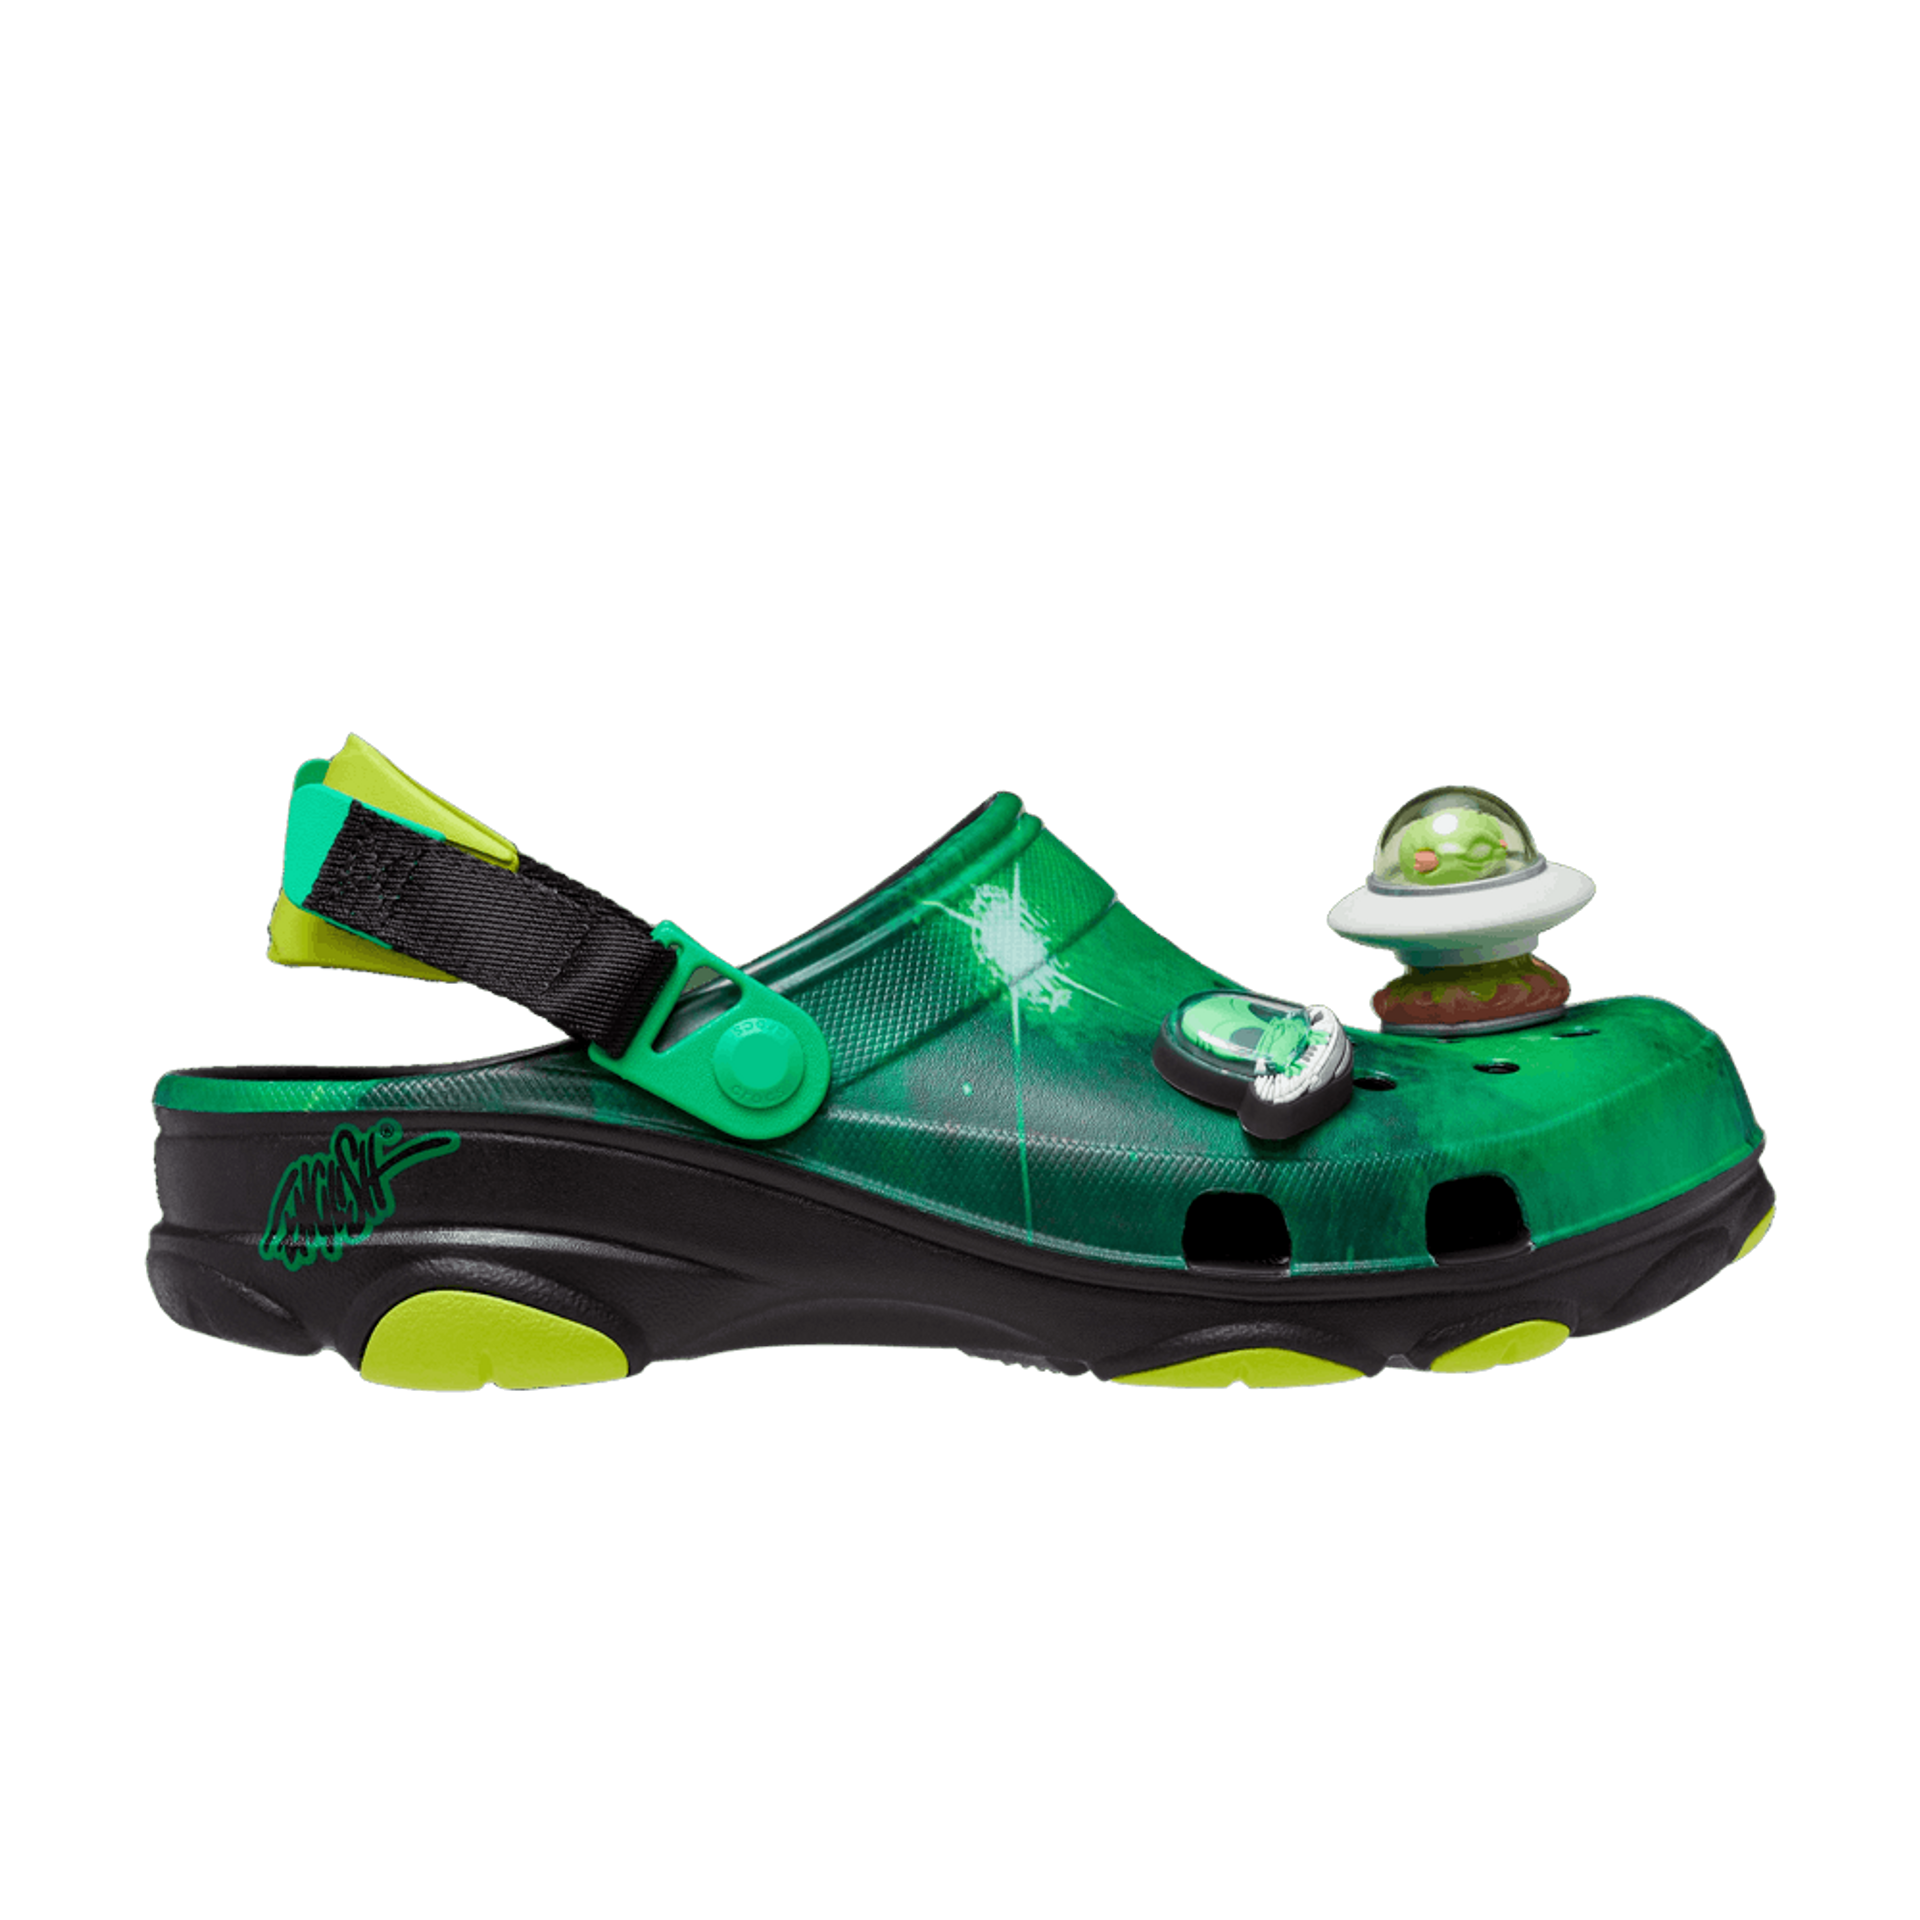 Ron English x Crocs All-Terrain Clog 'Area 54 - Green Galaxy'